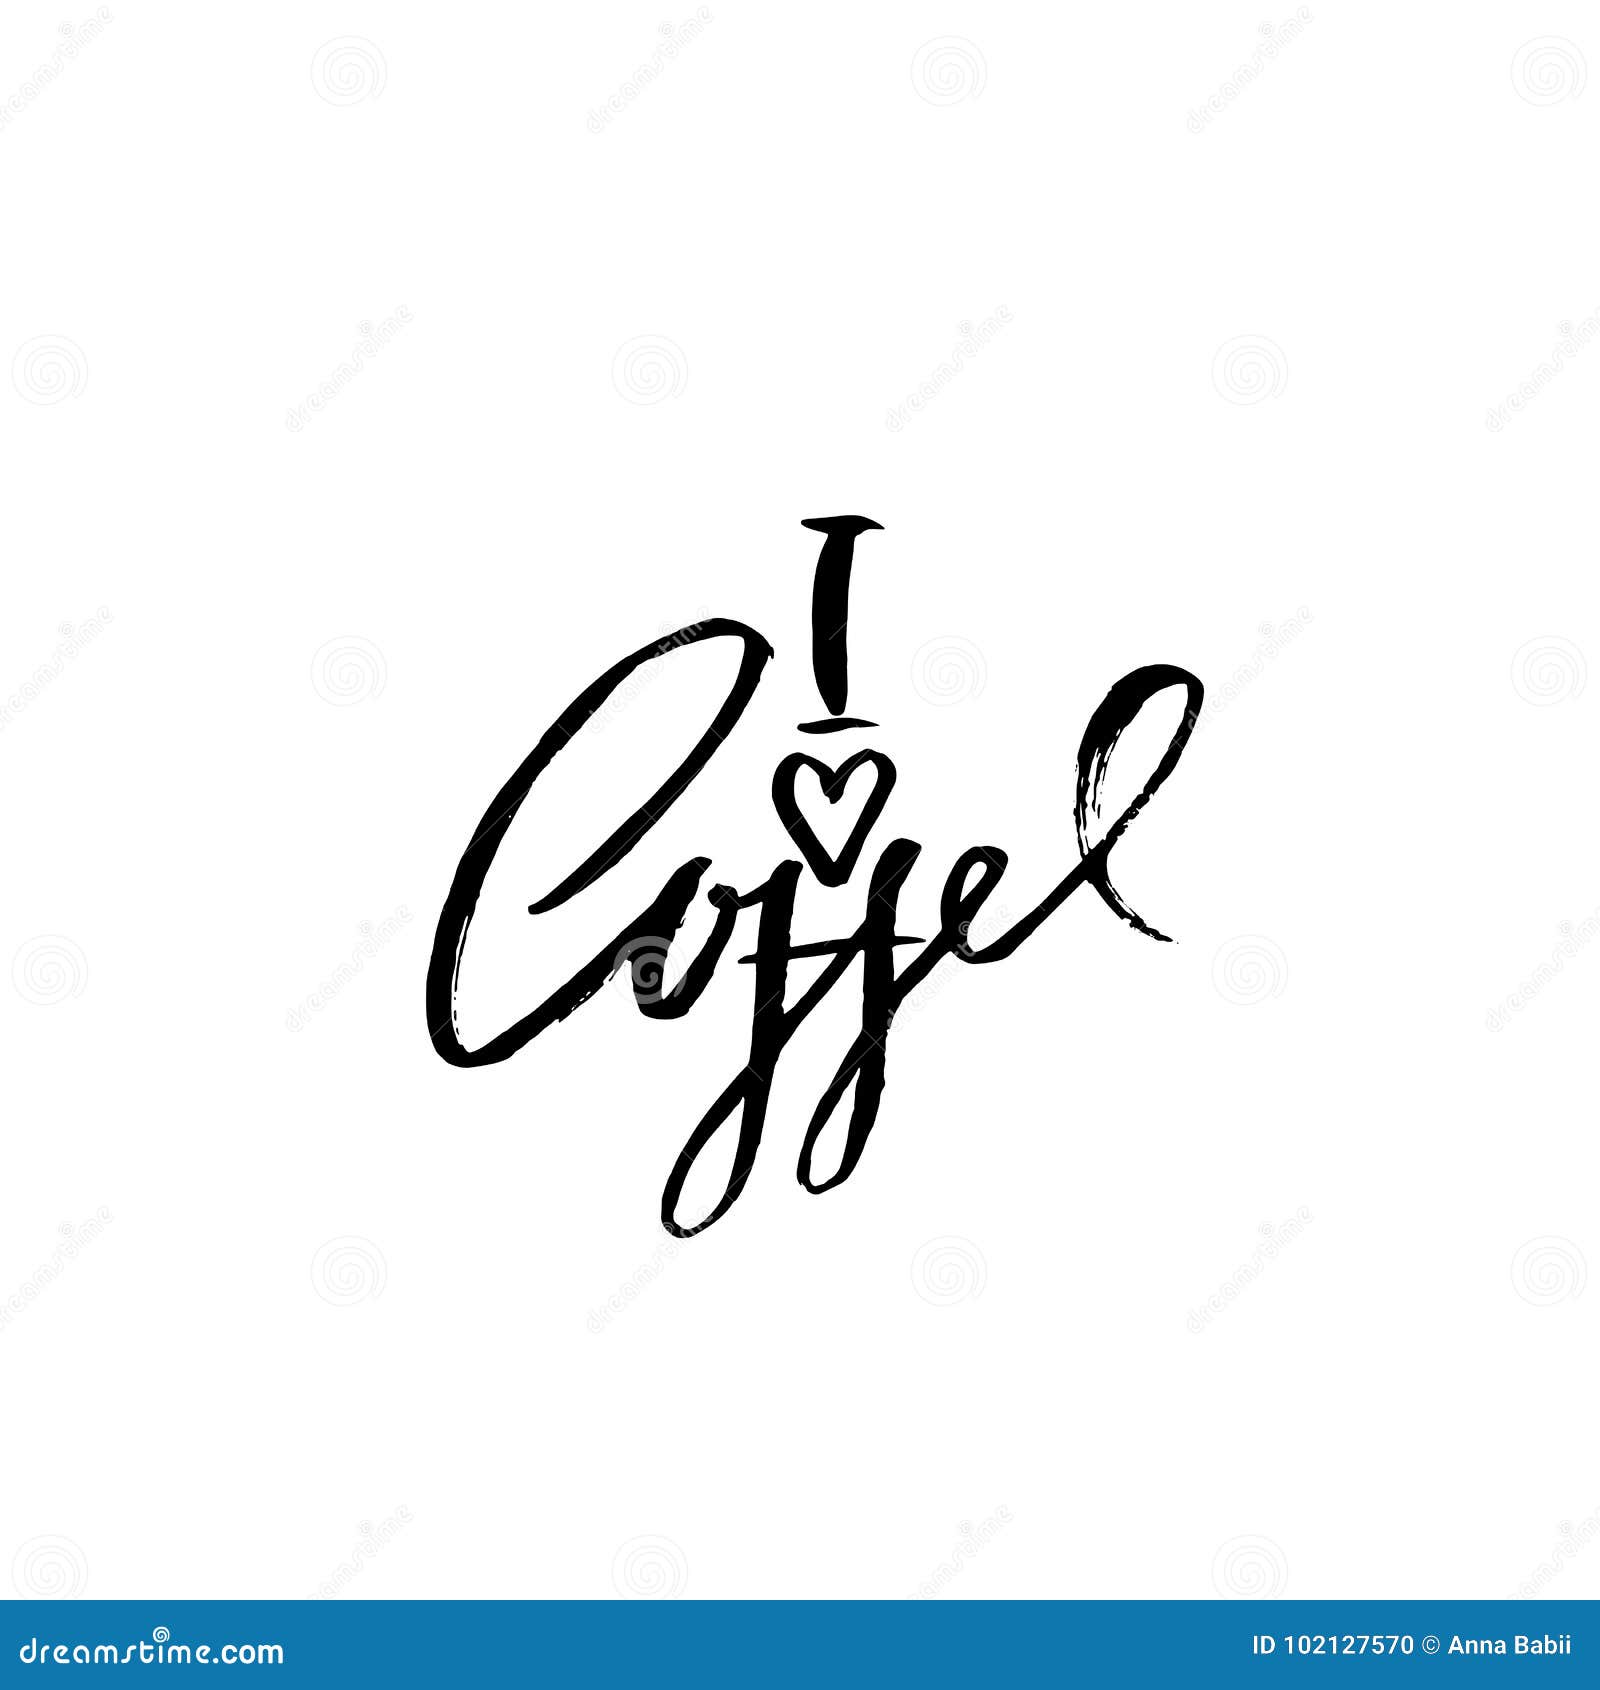 Coffee lover handwritten lettering poster Vector Image